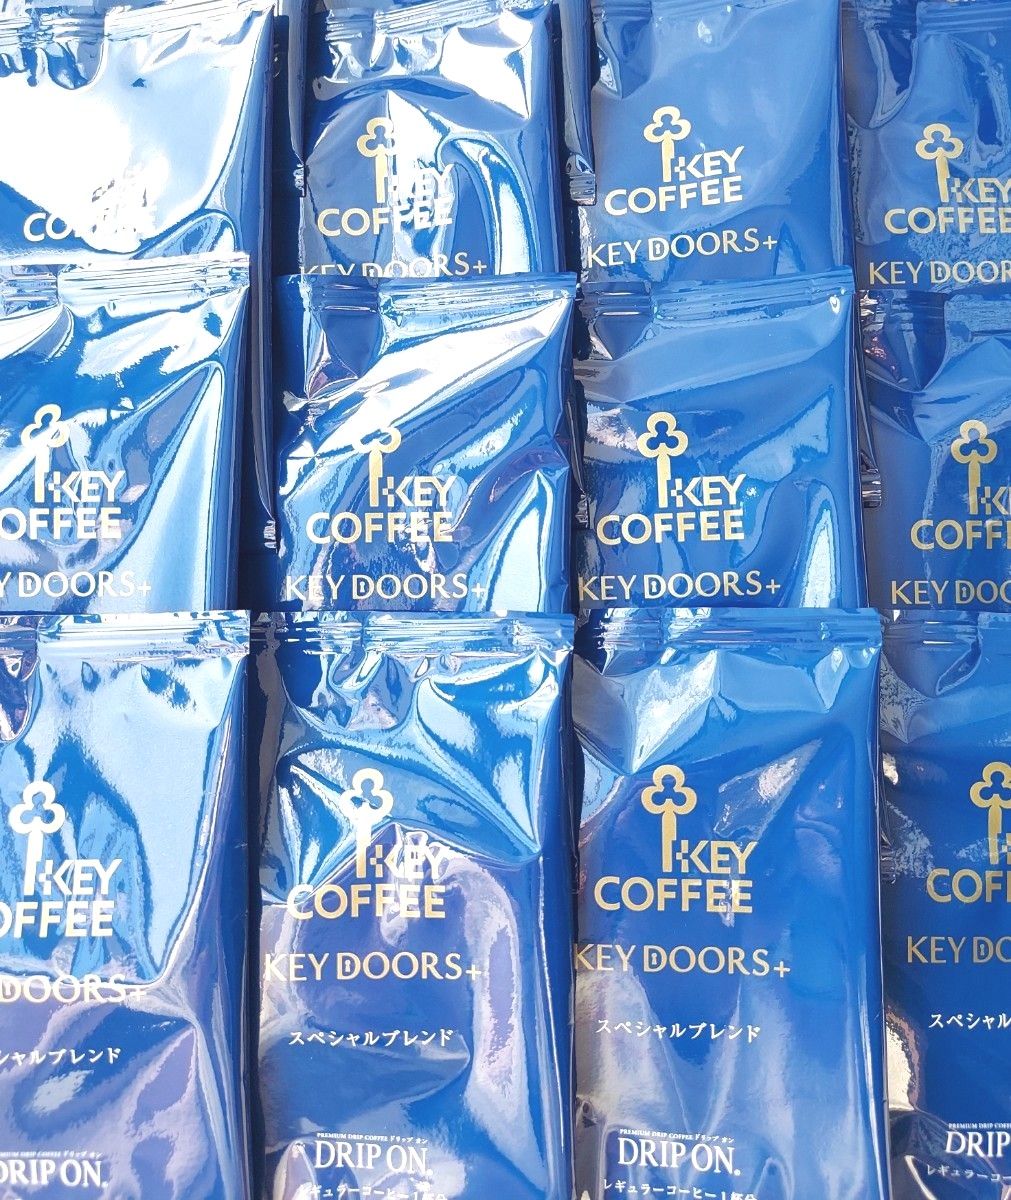 KEY COFFEE キーコーヒー ドリップオン 12パック